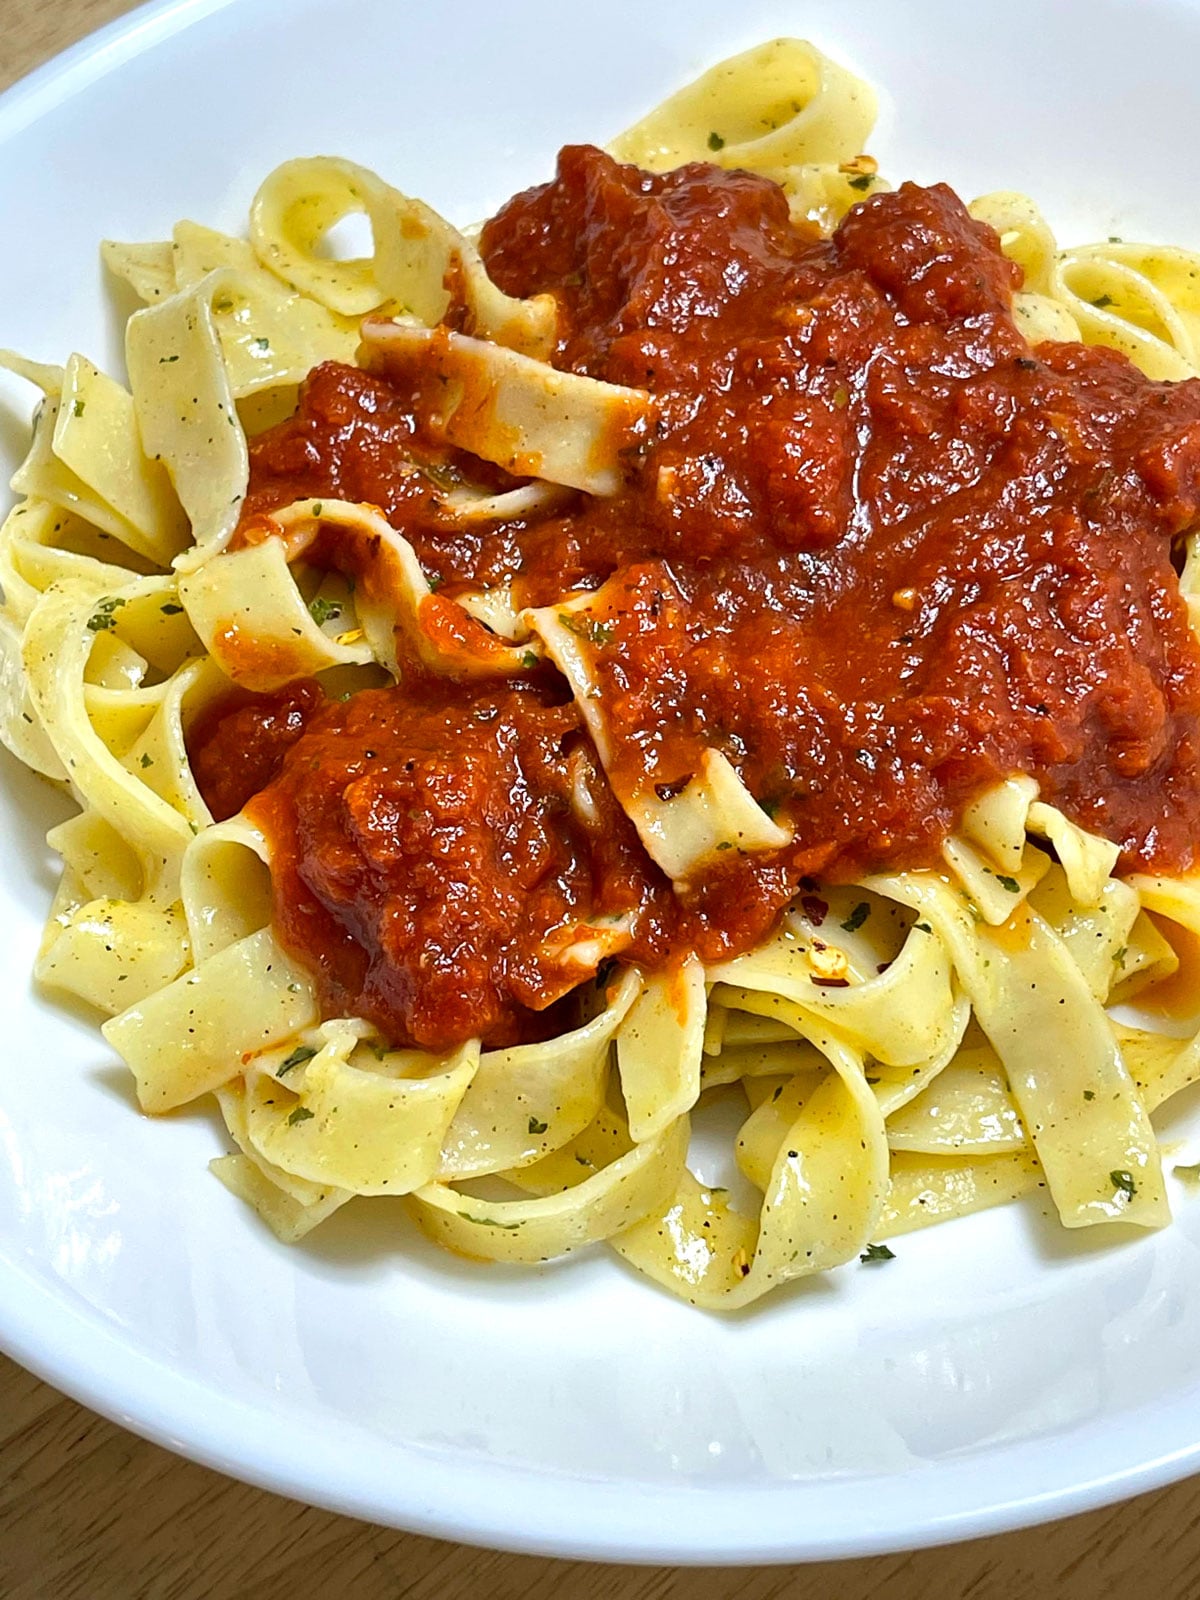 tagliatelle pasta in butter and sauce